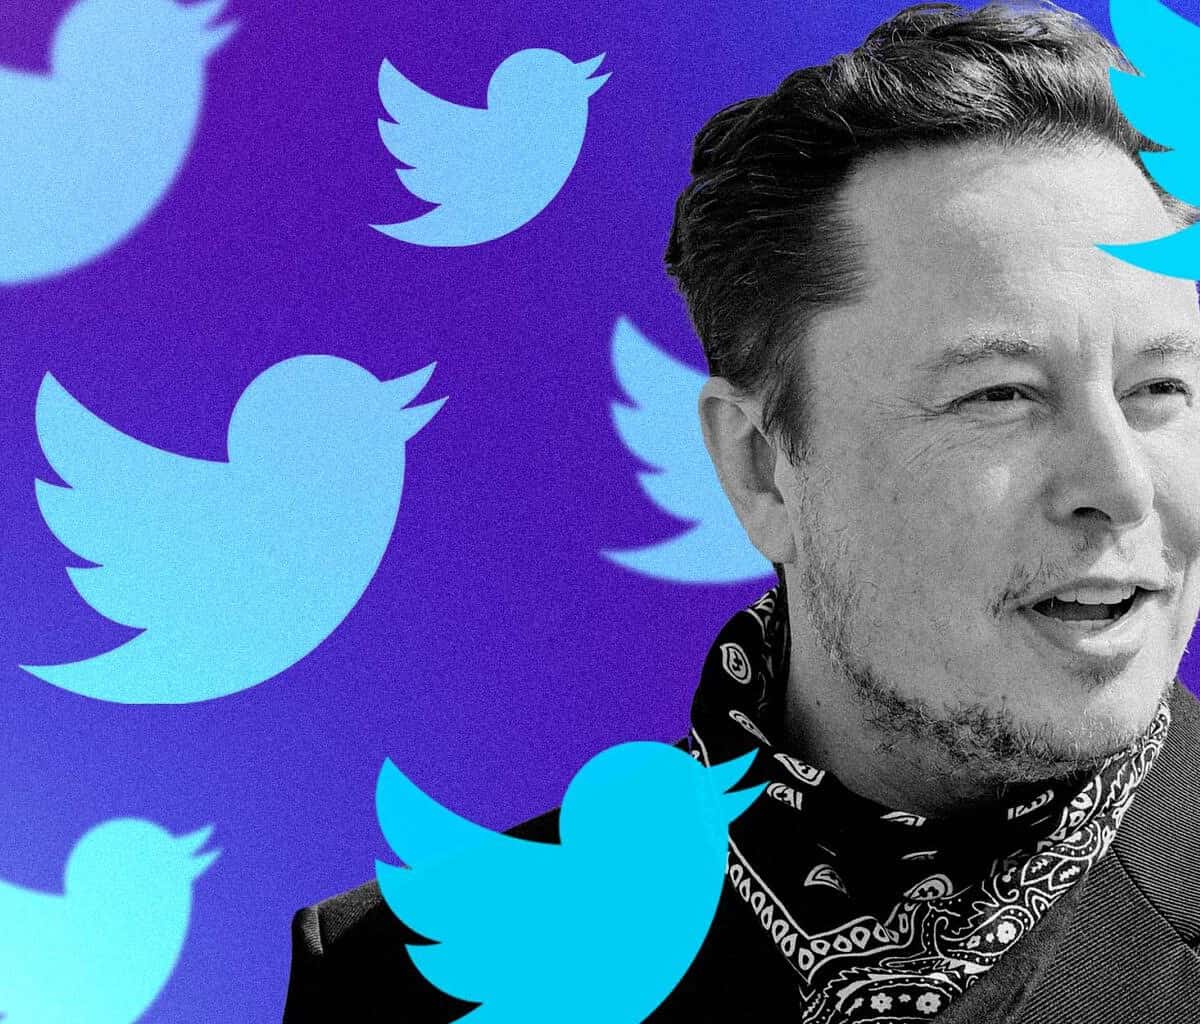 ¡Vendido! Twitter acepta oferta de 44 millones de dólares de Elon Musk